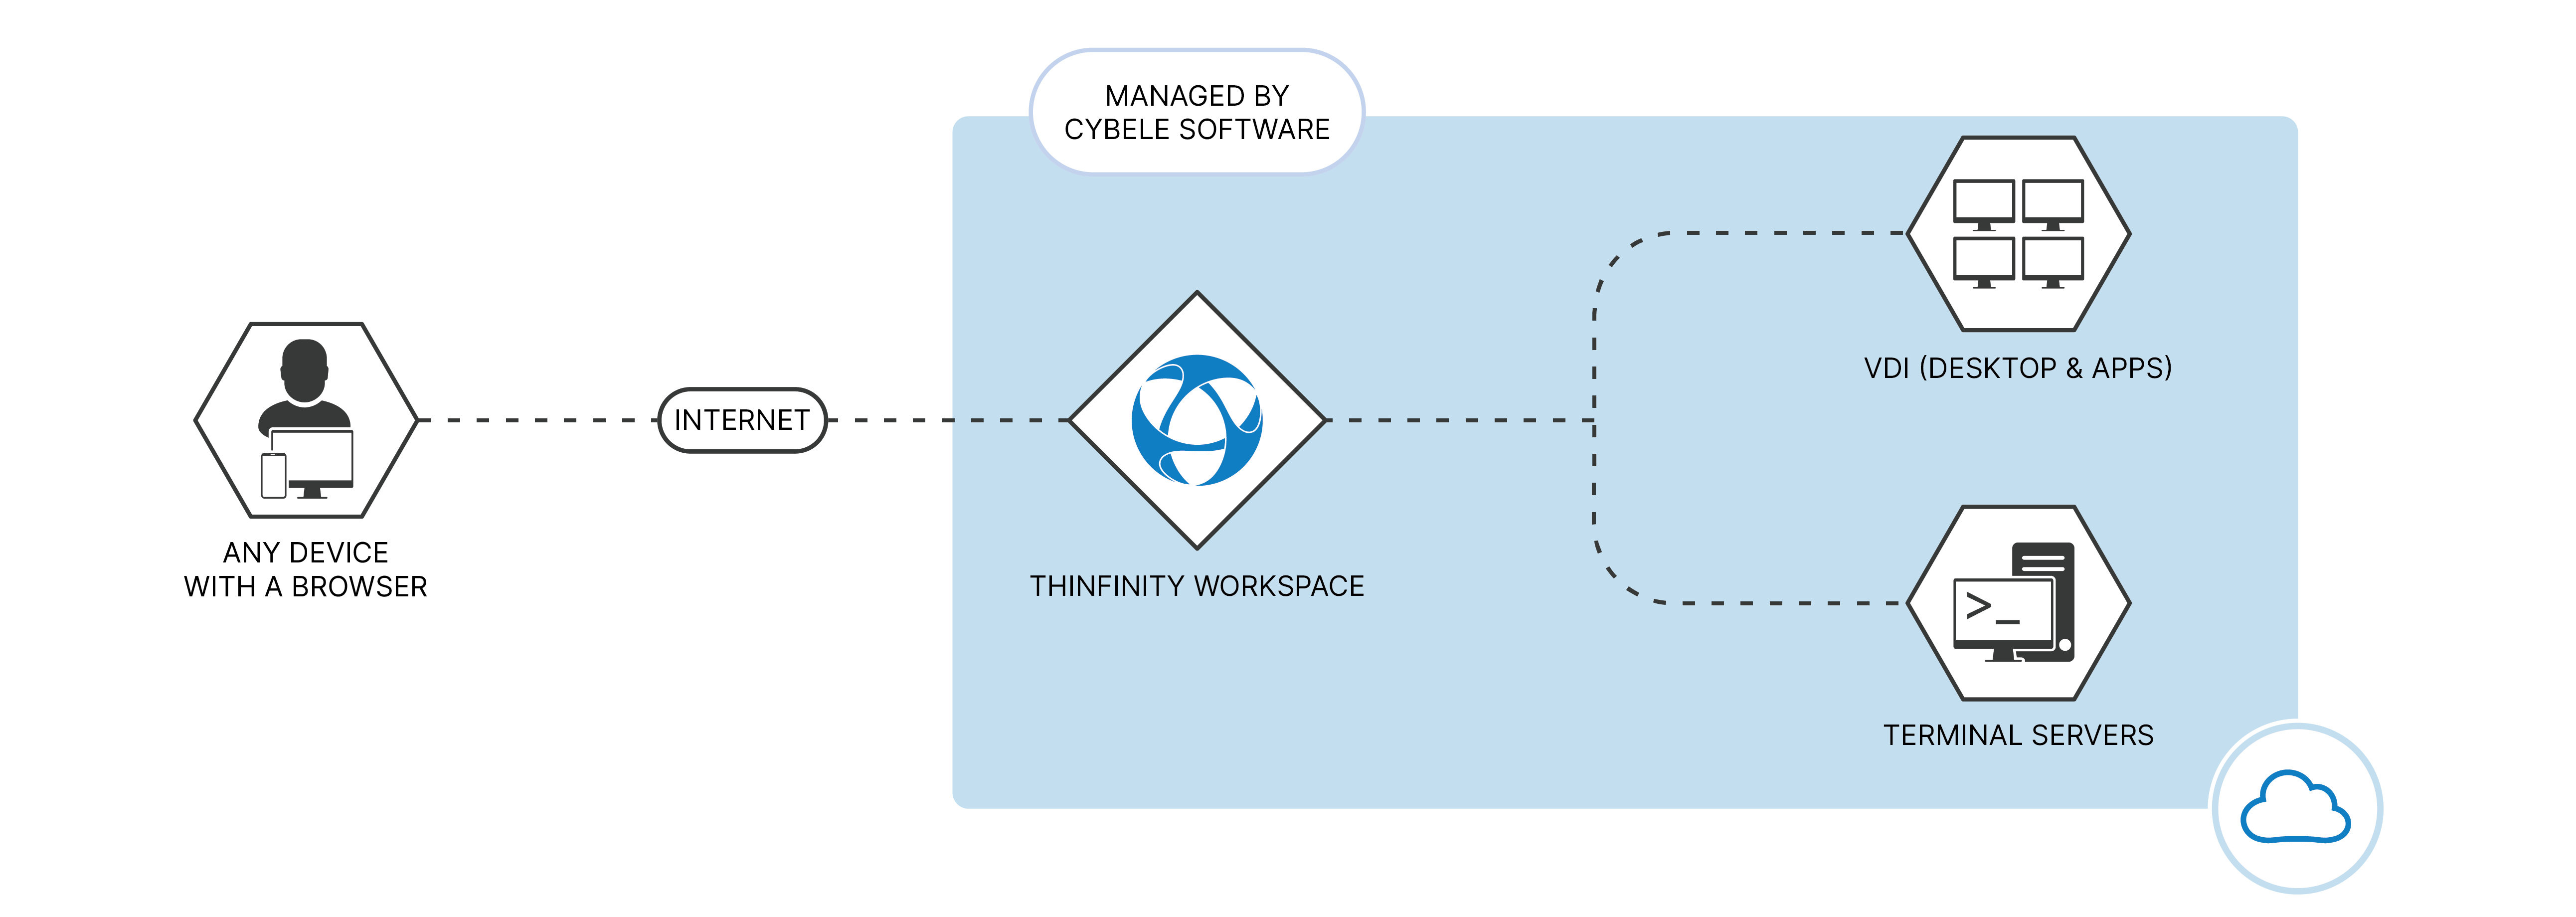 thinfinity-workspace-totalmente alojado